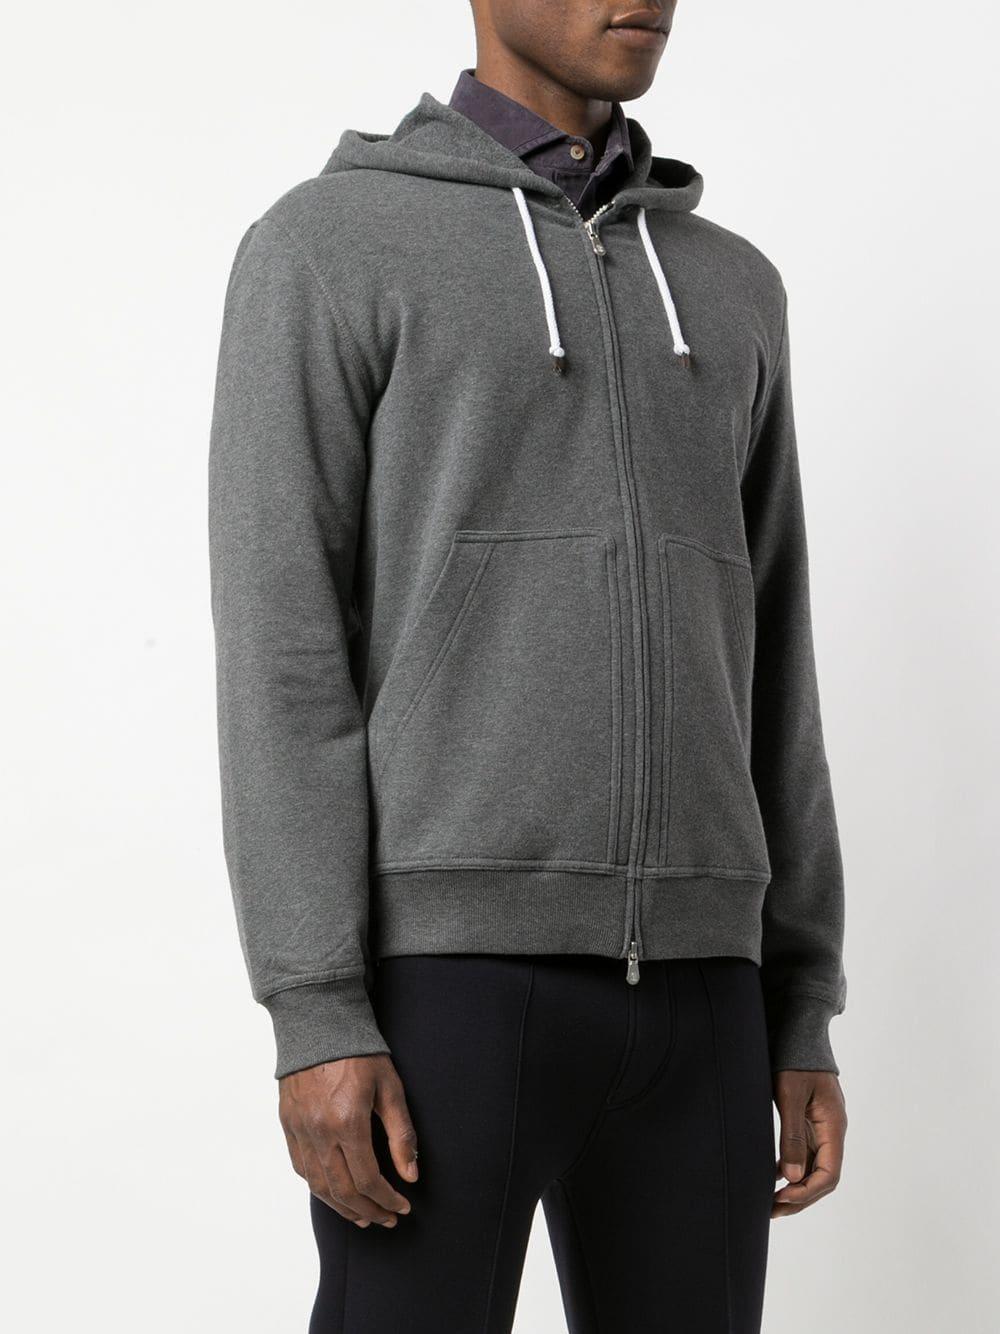 Brunello Cucinelli Hooded Sweatshirt in Grey (Gray) for Men - Save 